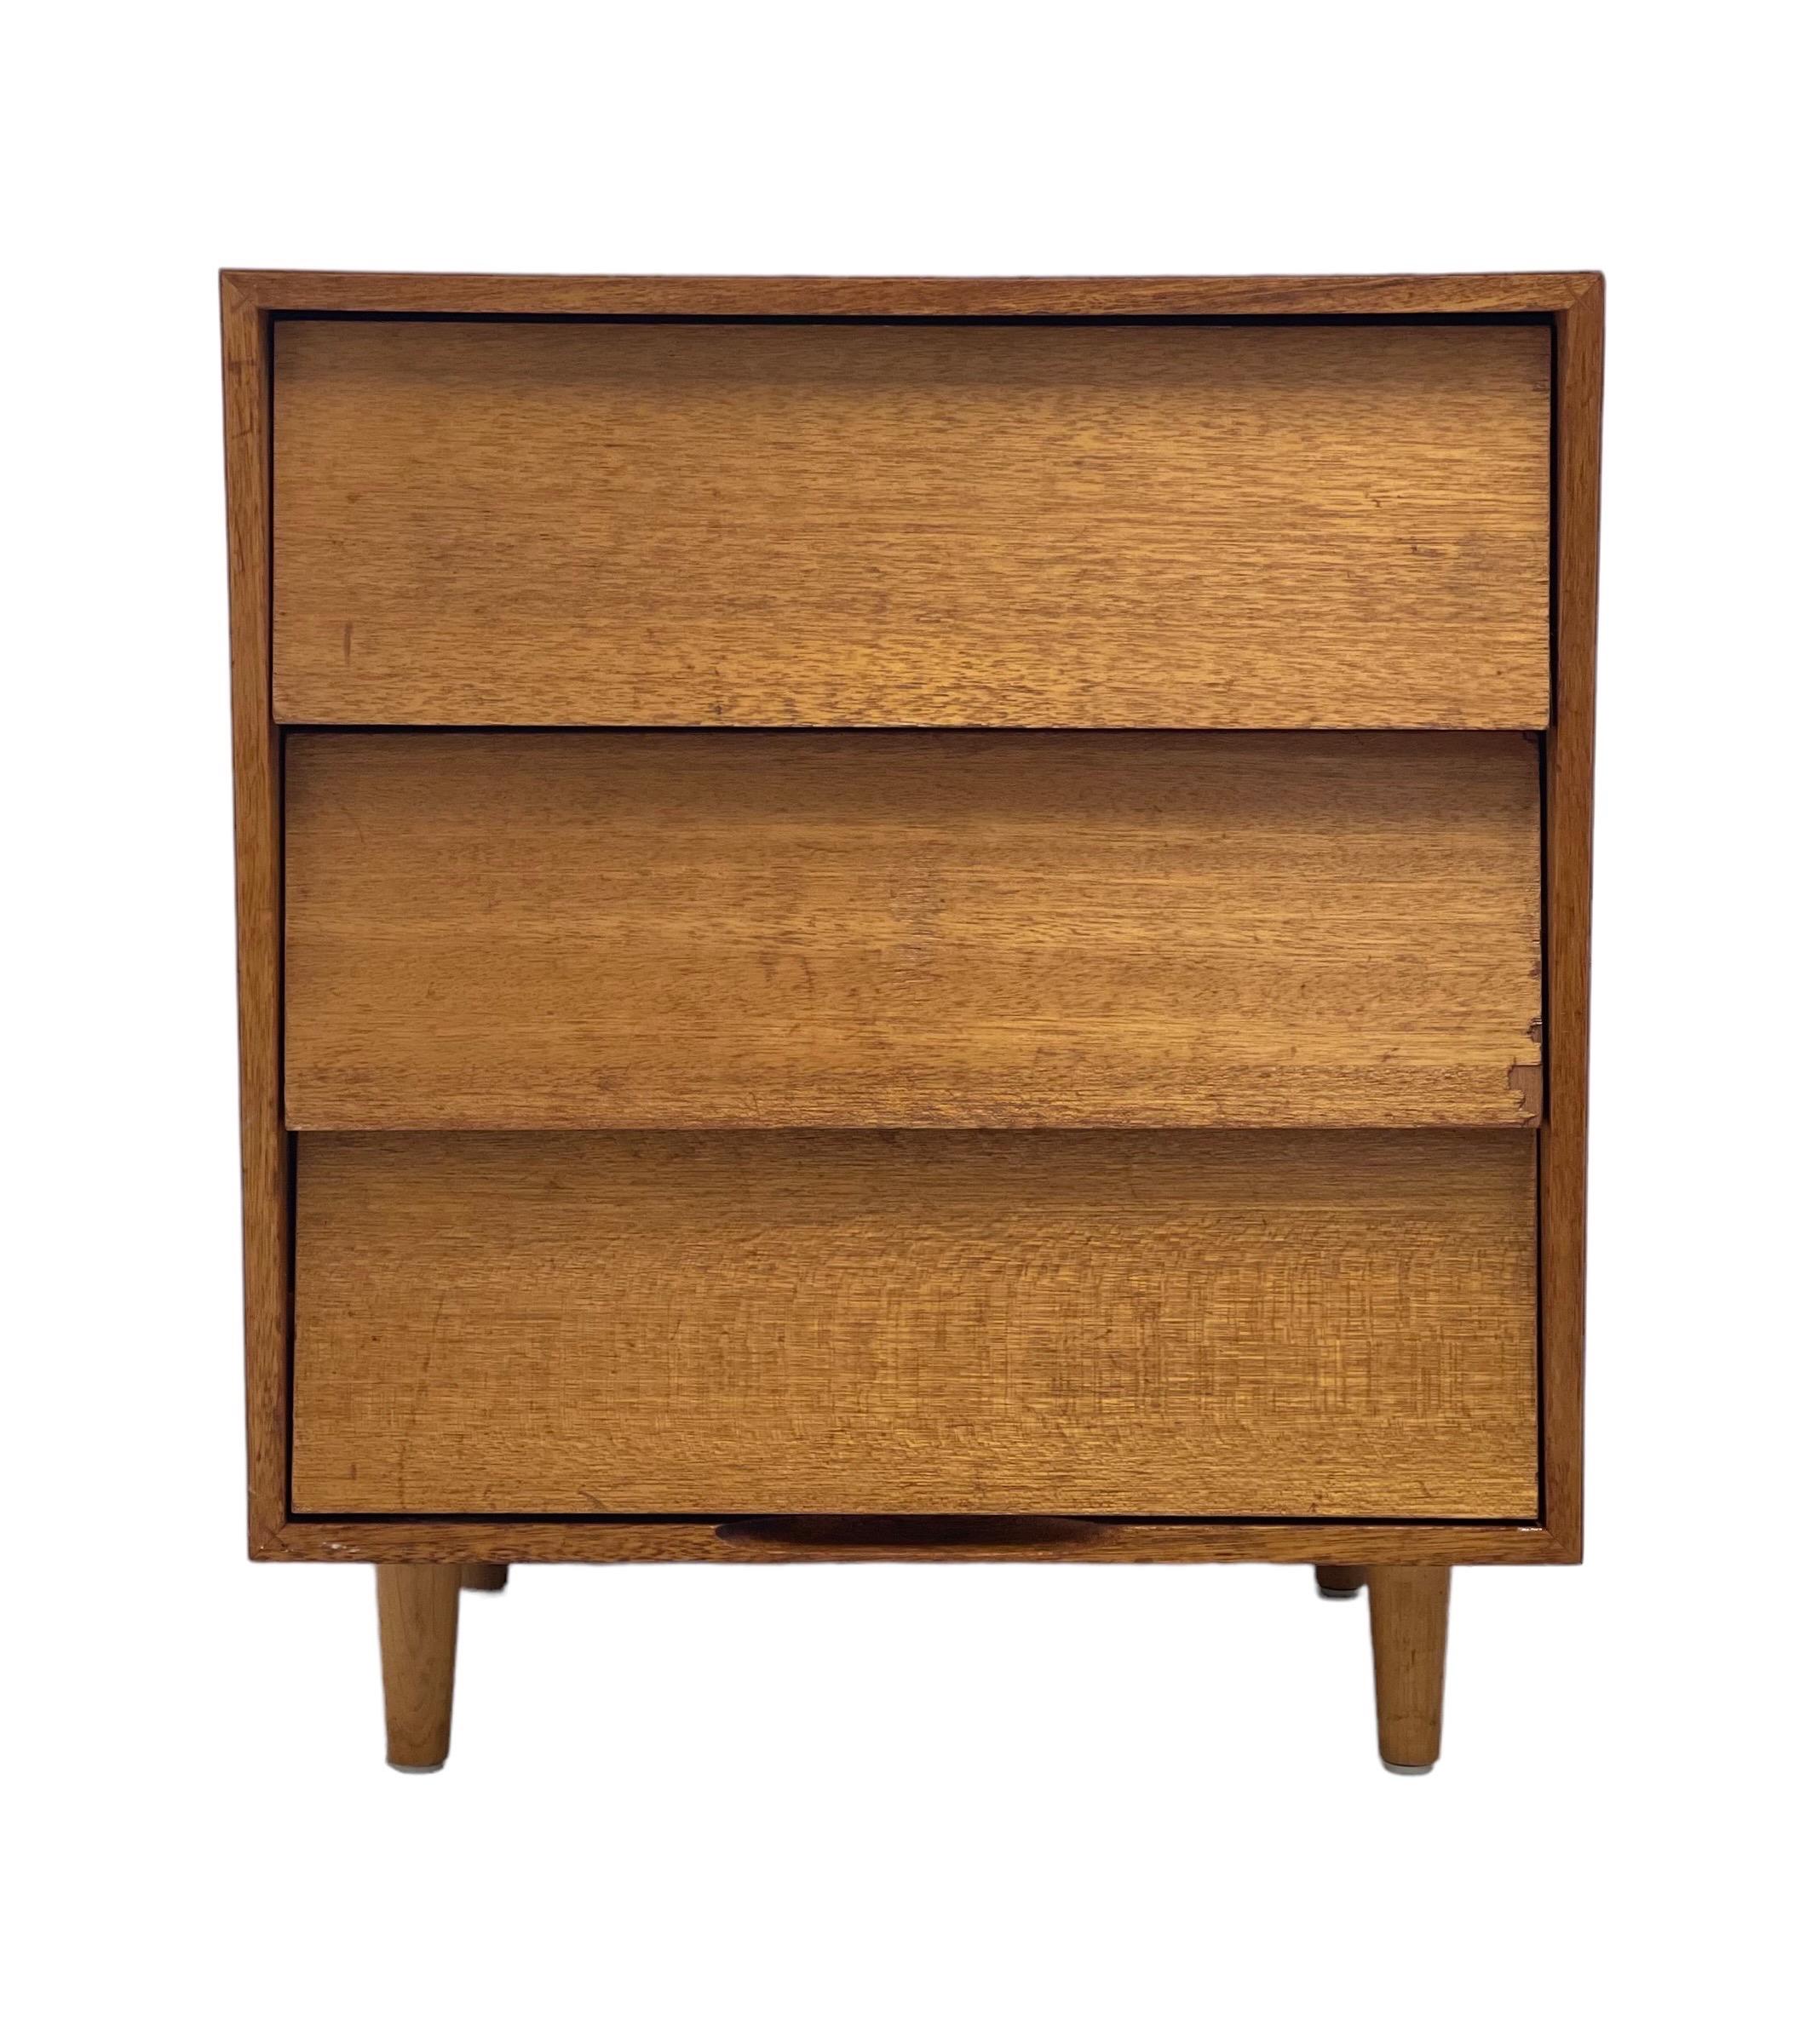 Vintage Mid-Century Modern 3 drawer dresser cabinet

Dimensions: 24 W 17 D 27 H.